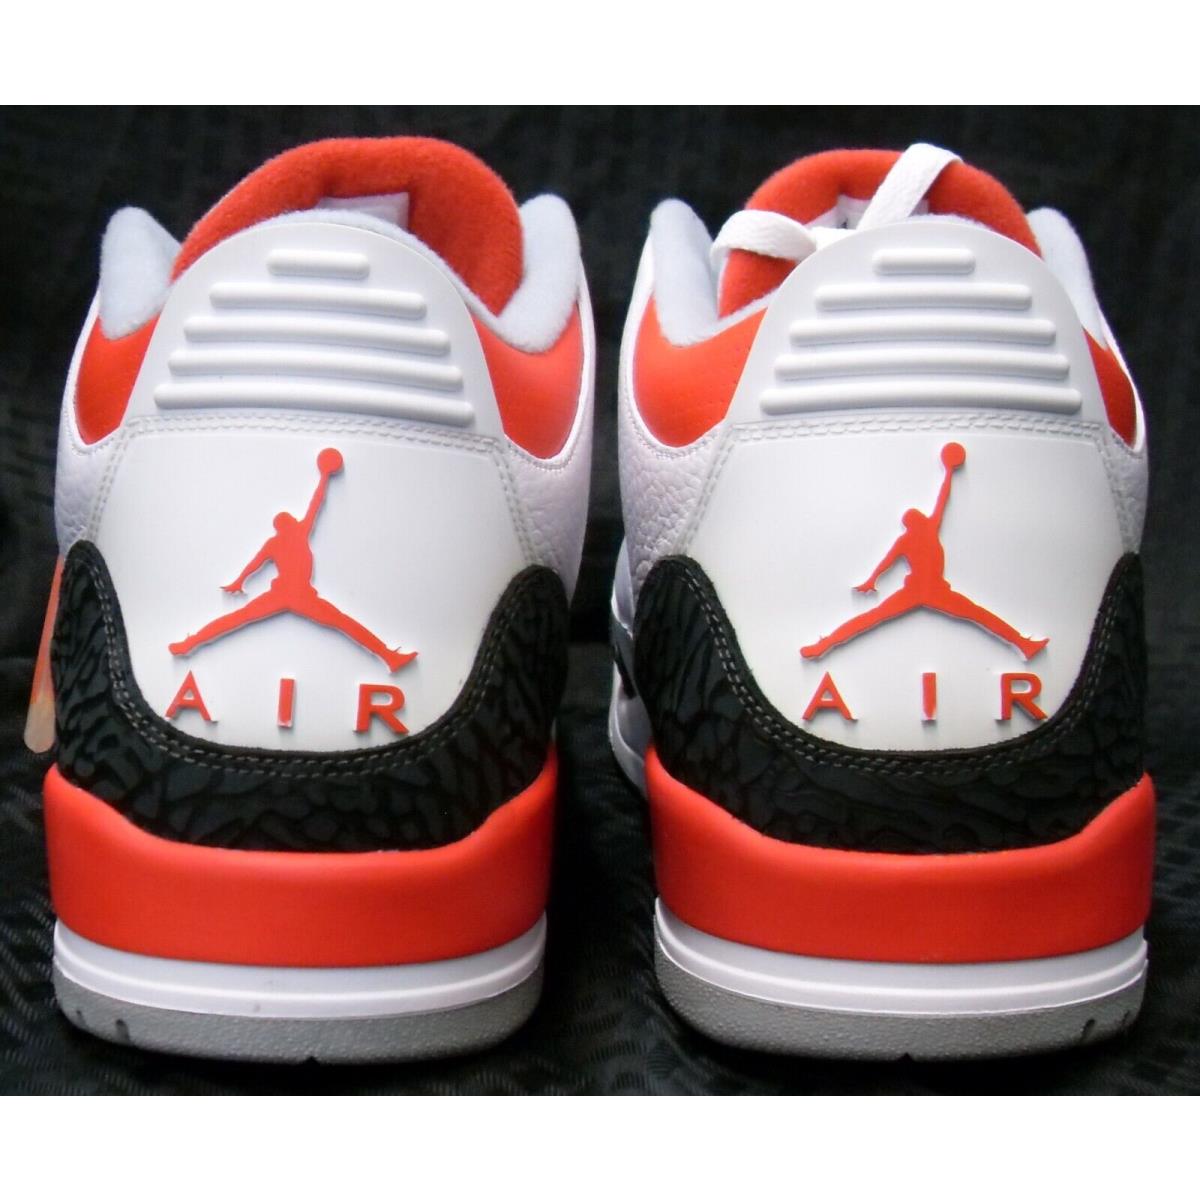 Nike shoes Air - Red White Black 3